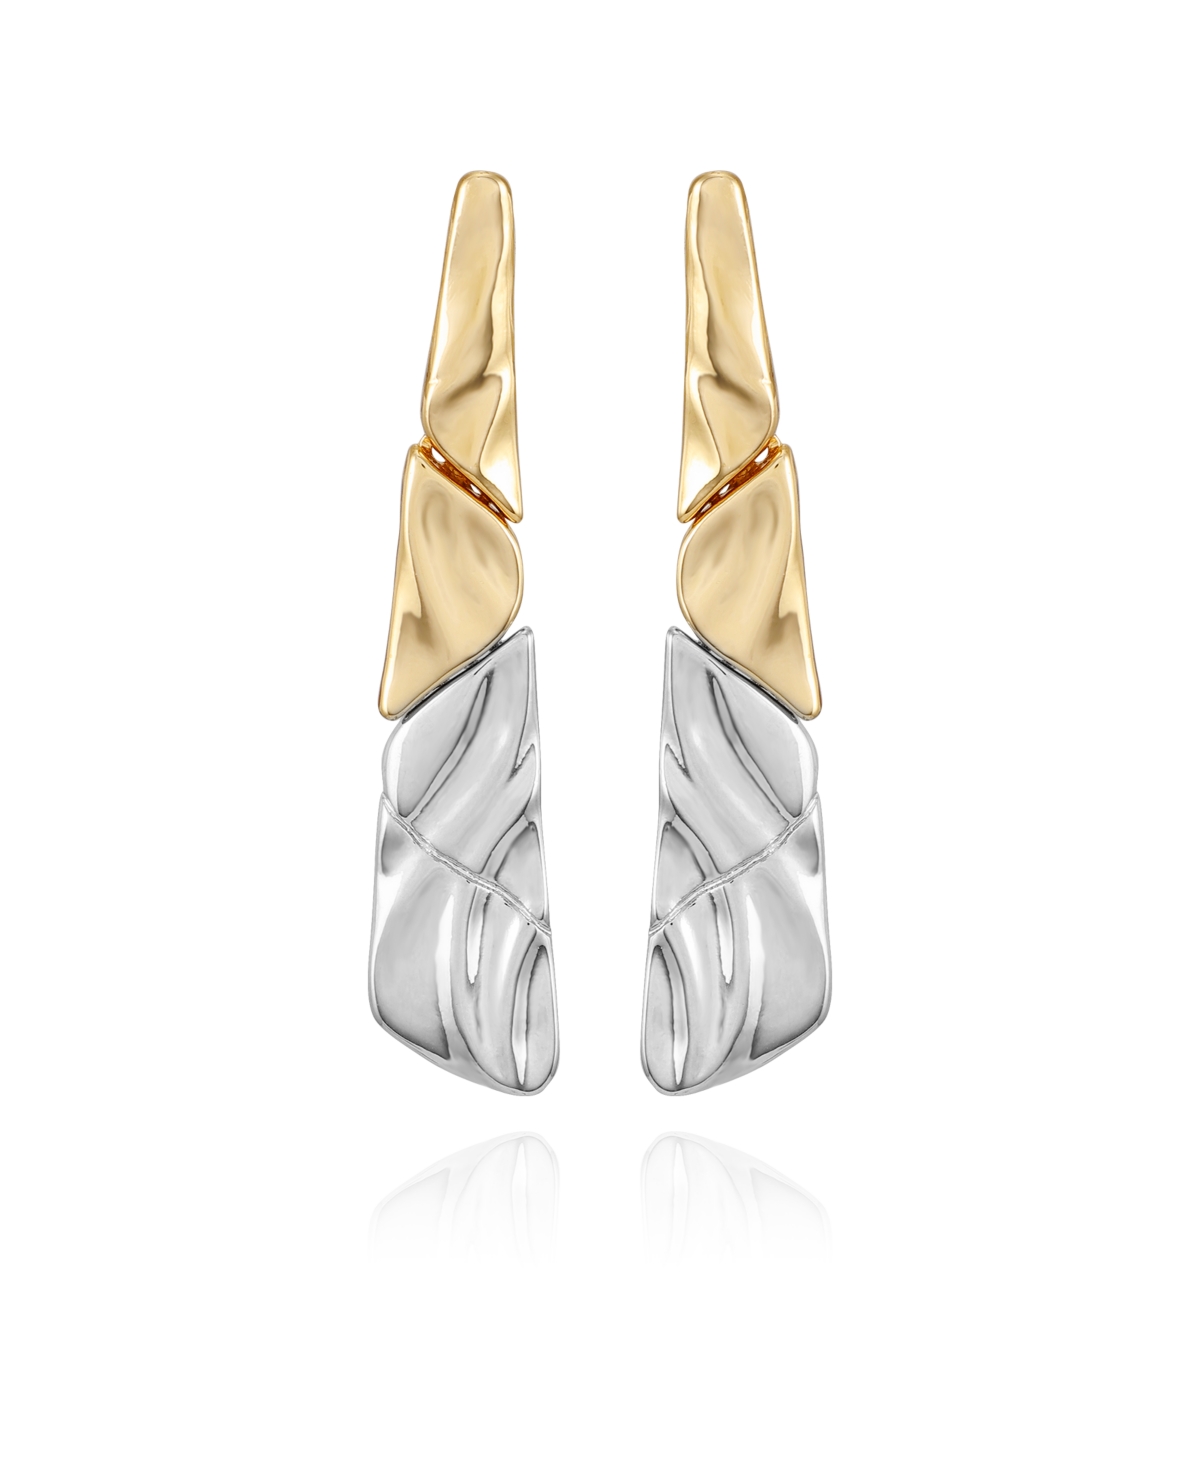 Two-Tone Textured Hoop Earrings - Gold